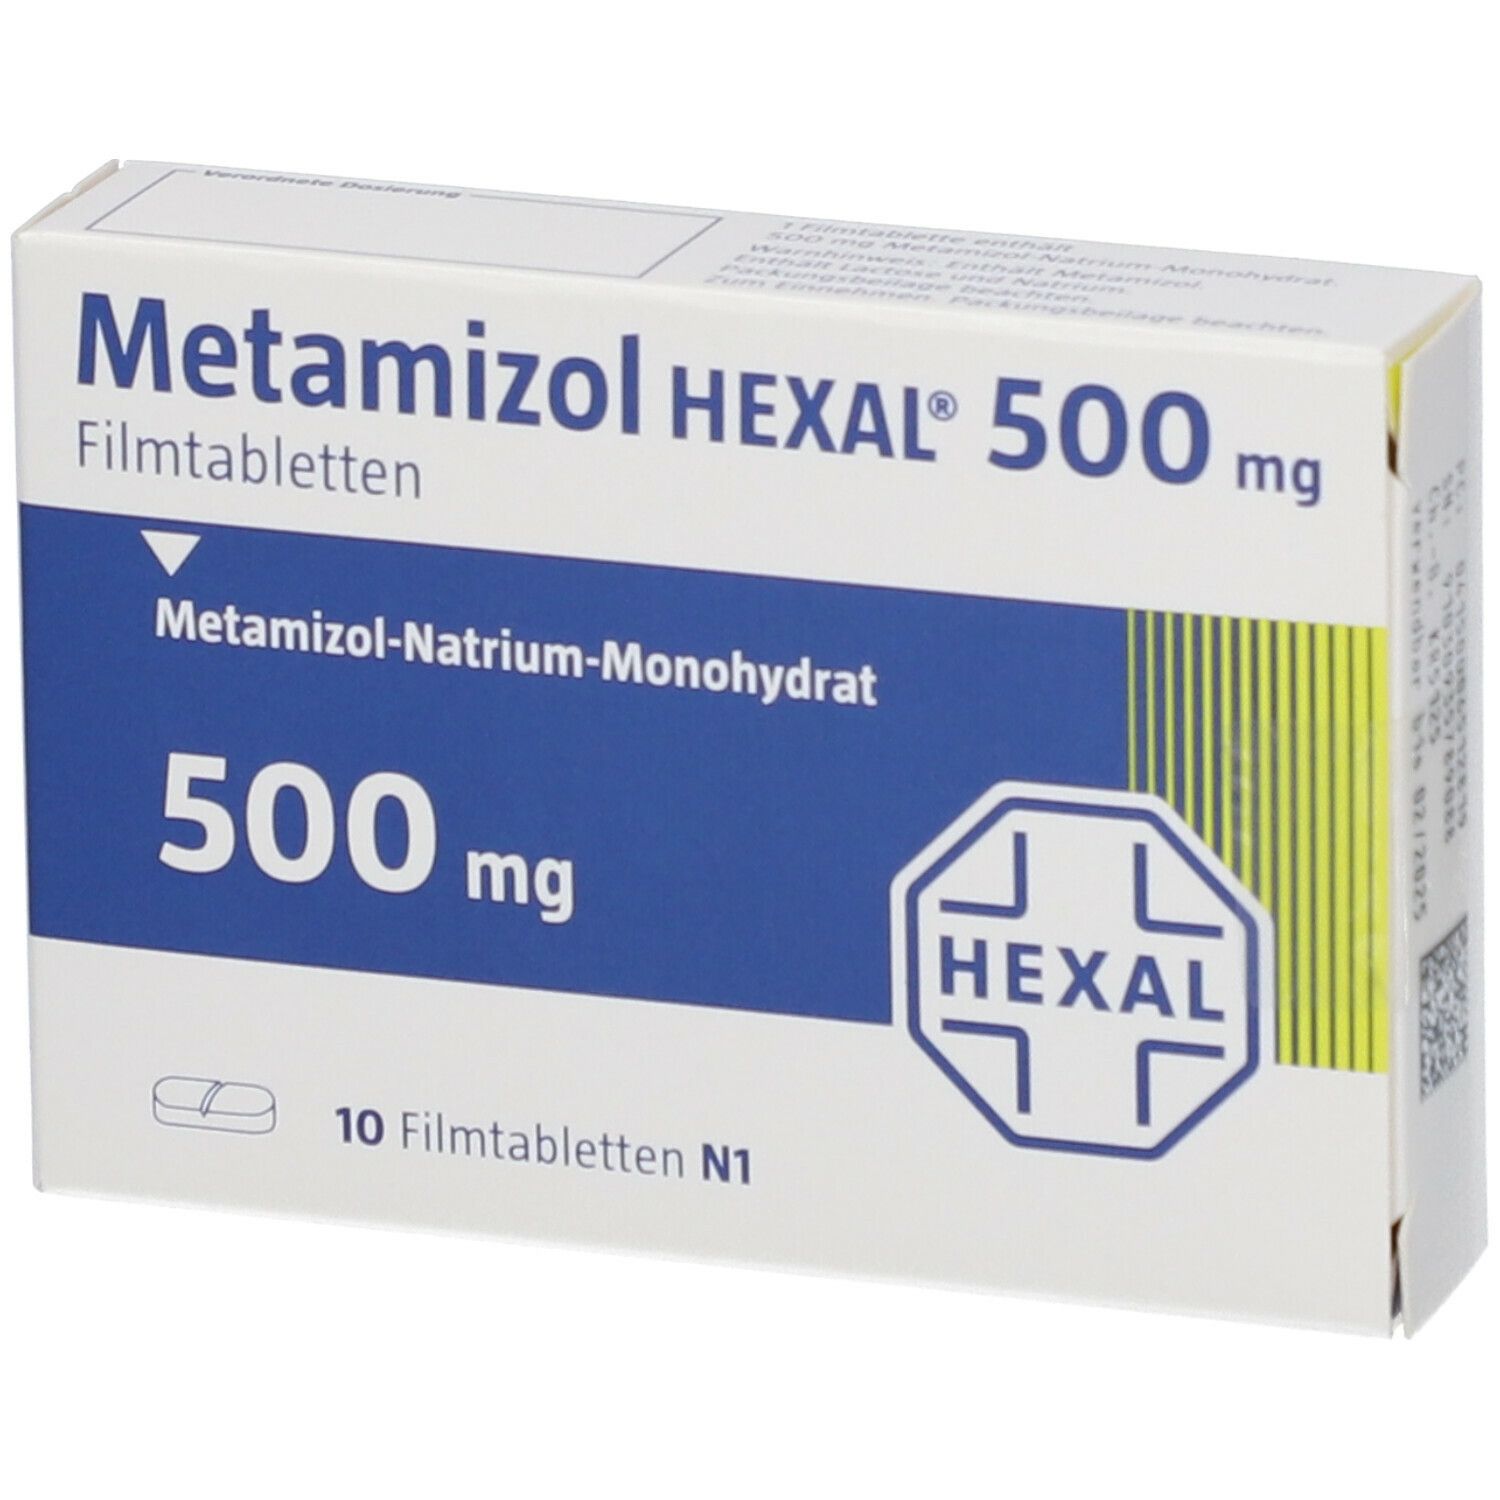 Metamizol HEXAL® 500 mg